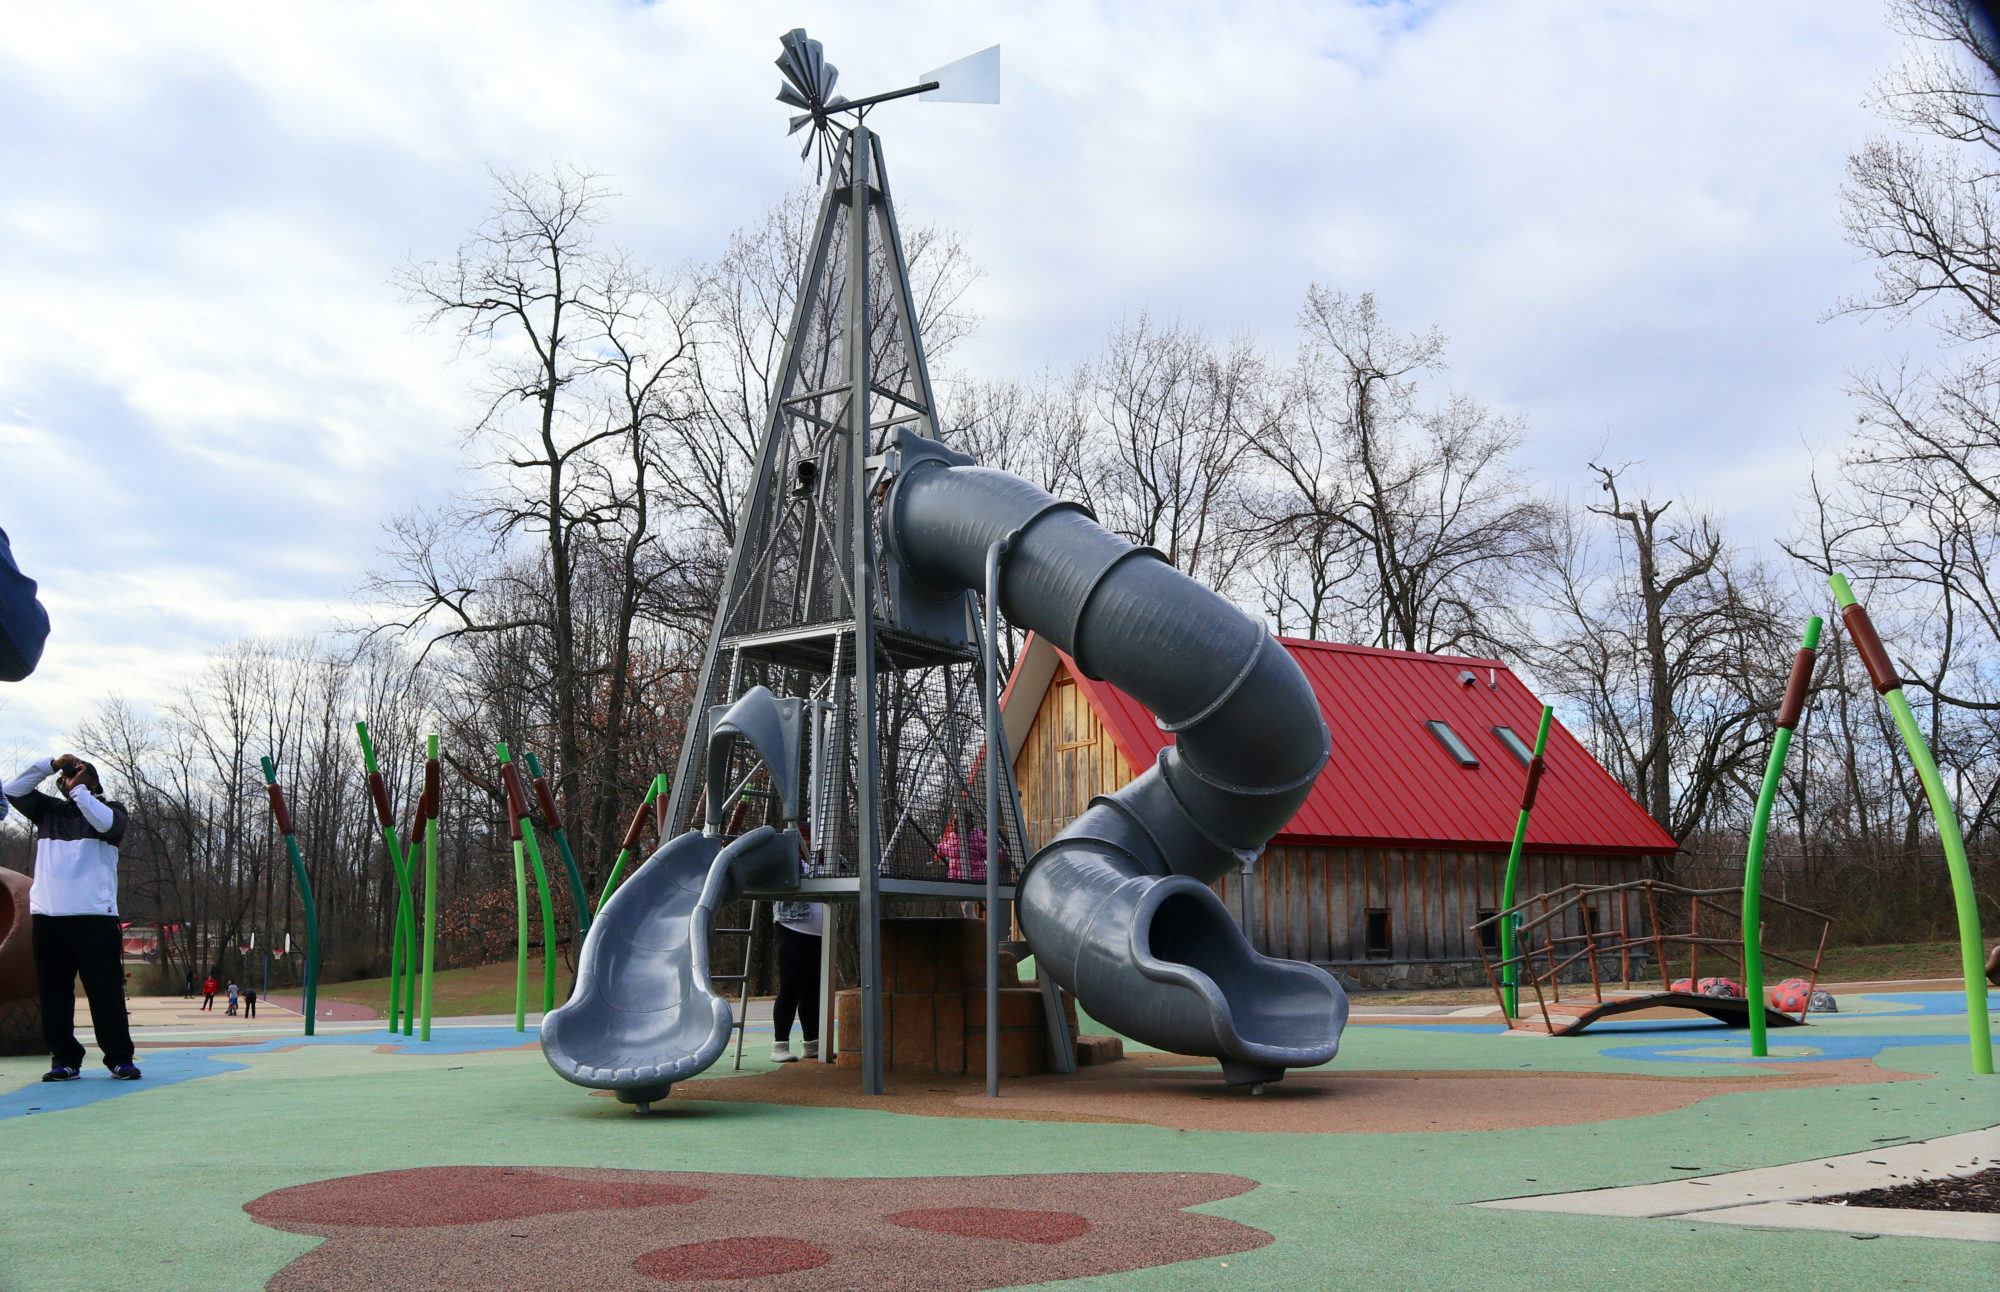 Walker Mill Regional Park Playground